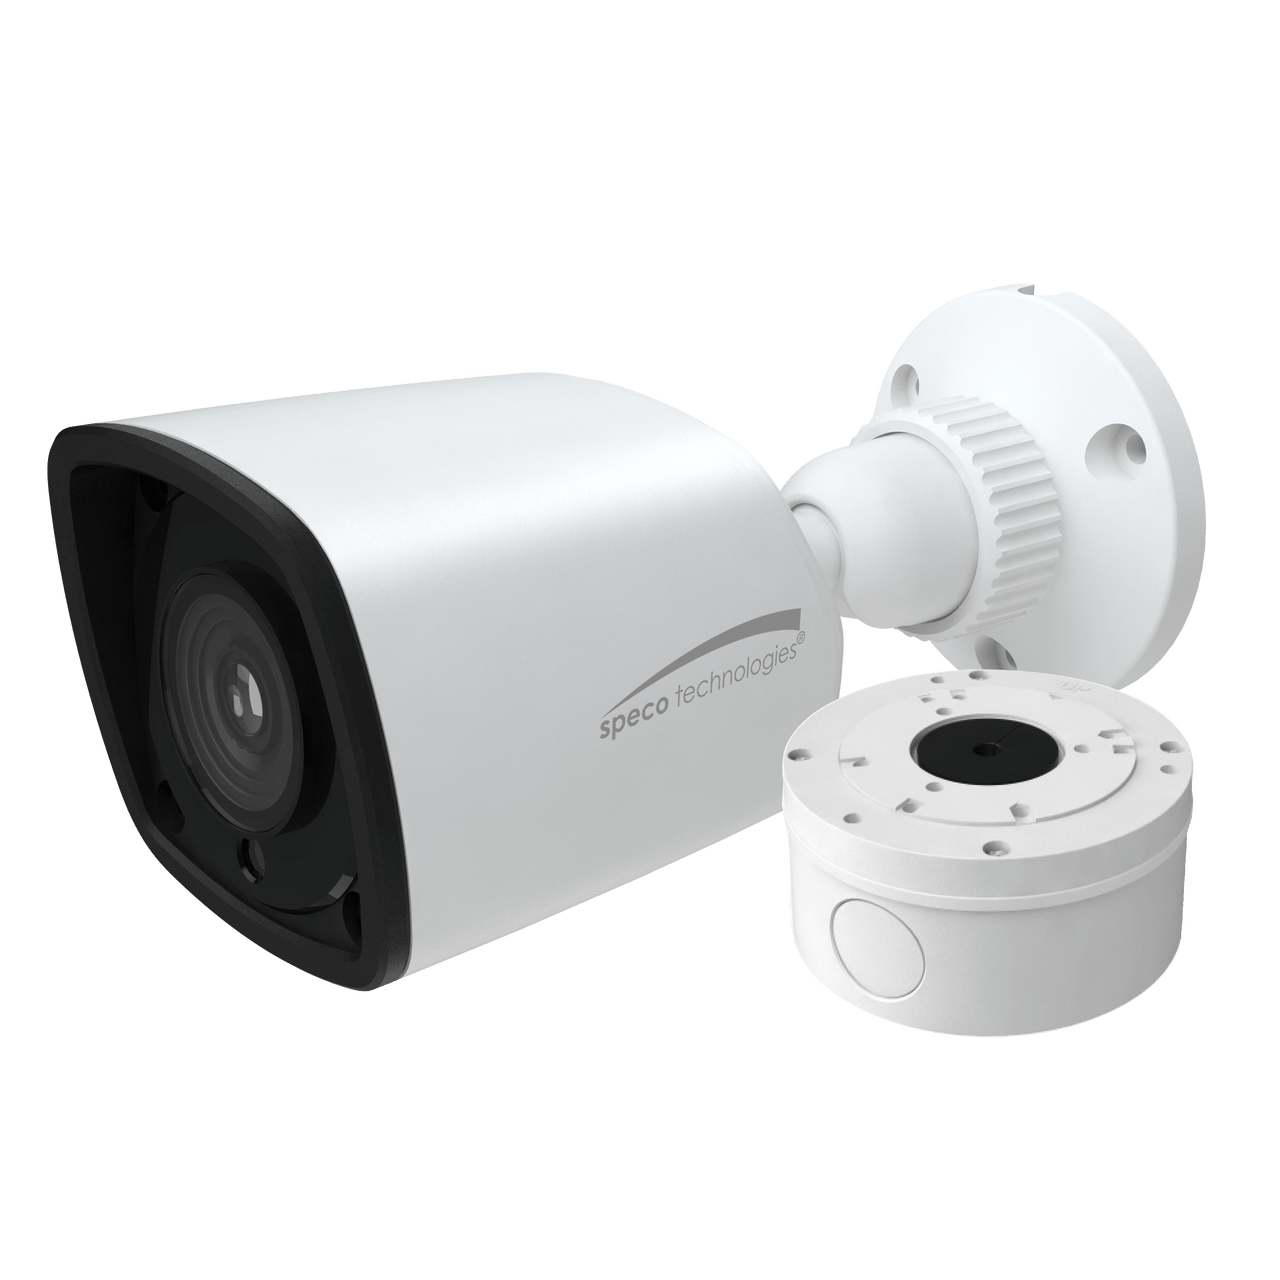 Speco Technologies VLBT5W 2MP HD-TVI Bullet Camera, IR, 2.8mm lens, Included Junc Box, White Housing (VLBT5W)